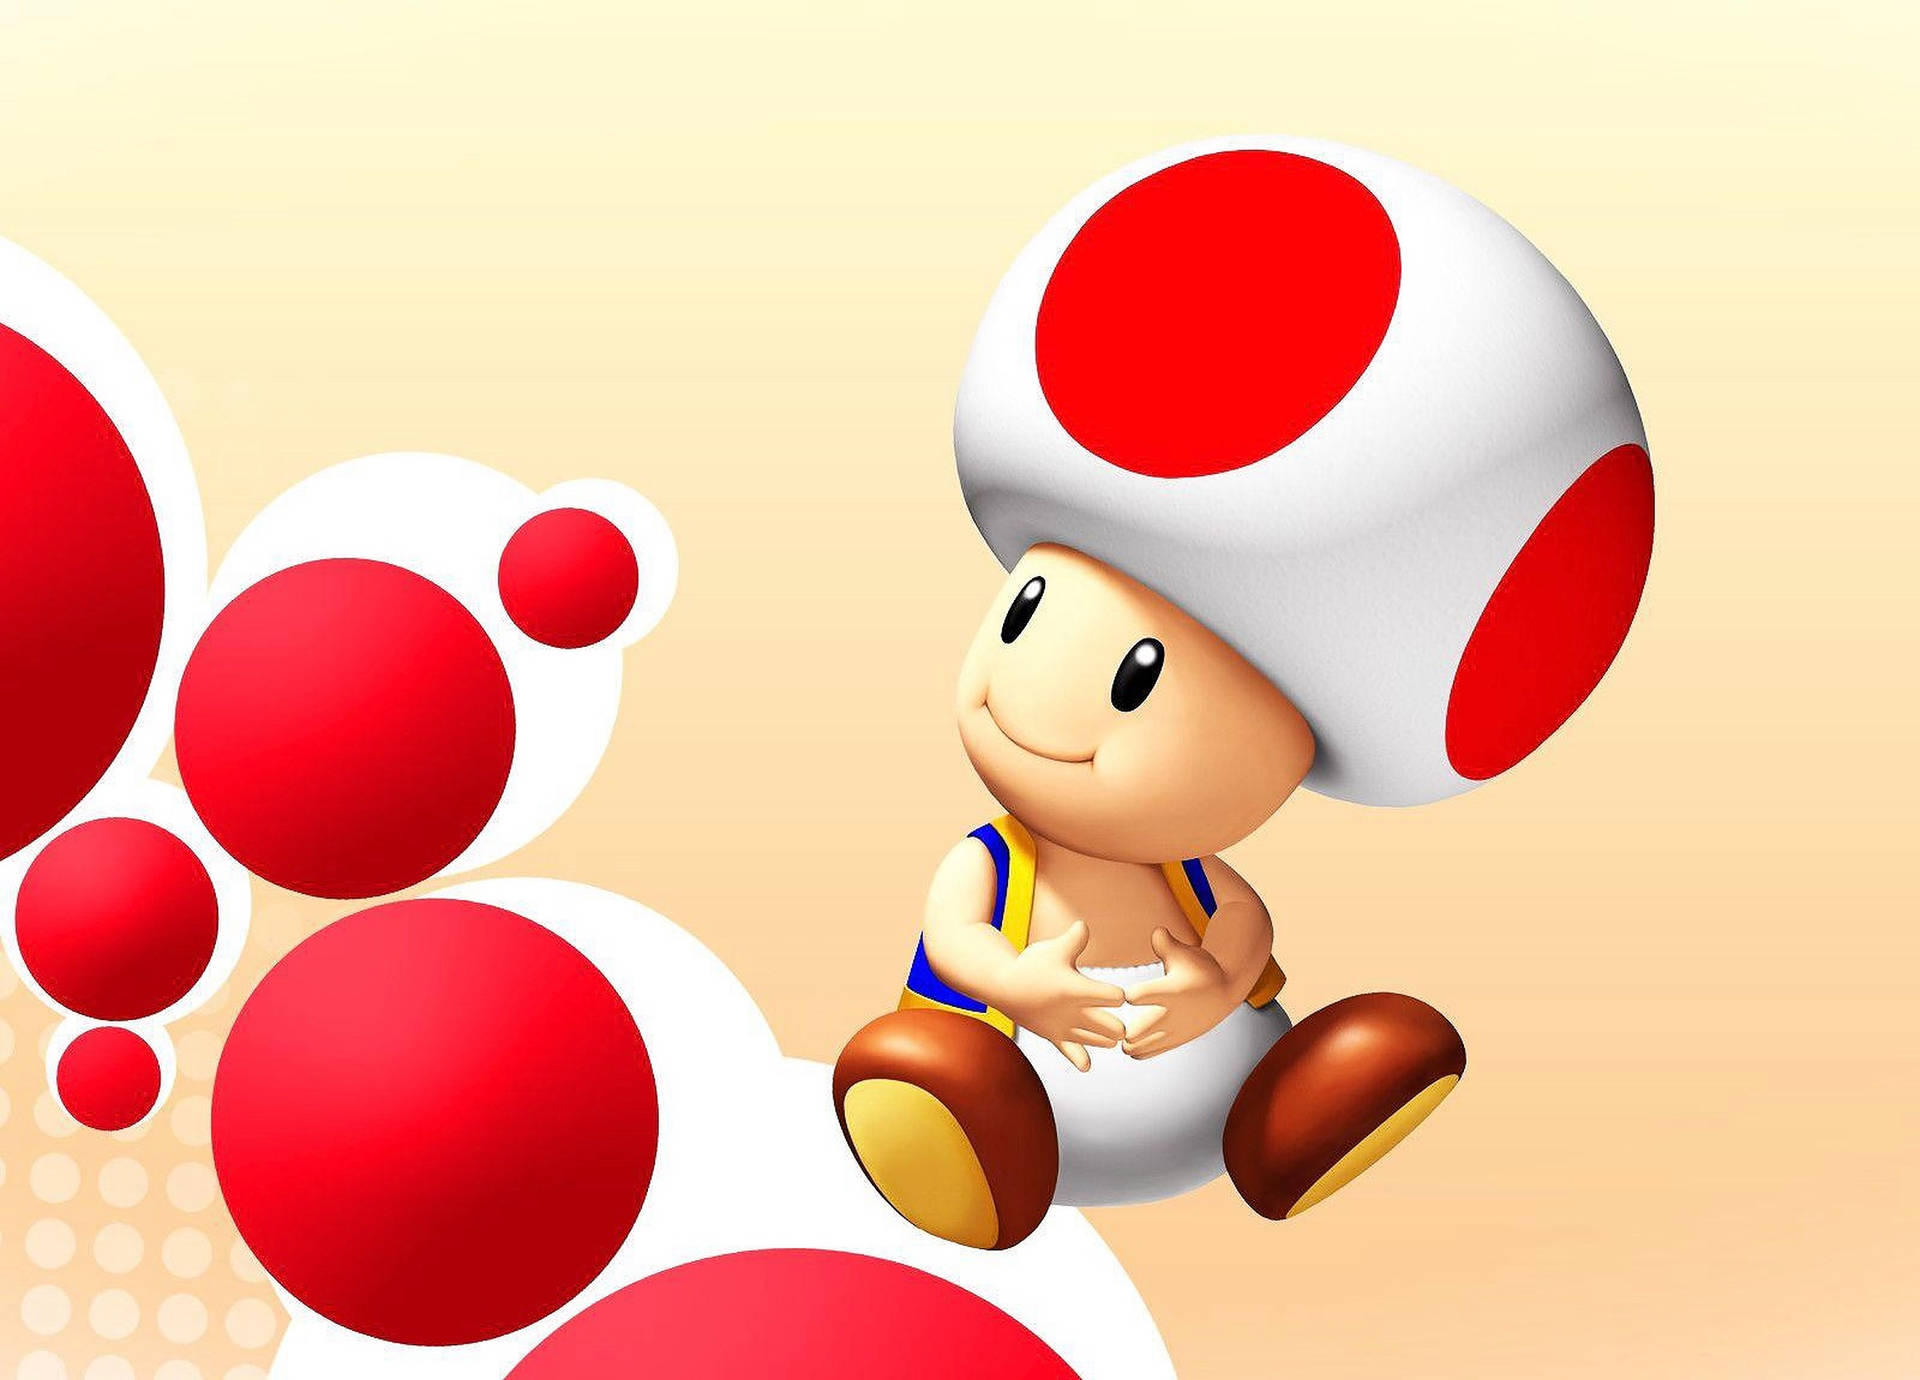 Cutesy Toad Nintendo Character Wallpaper